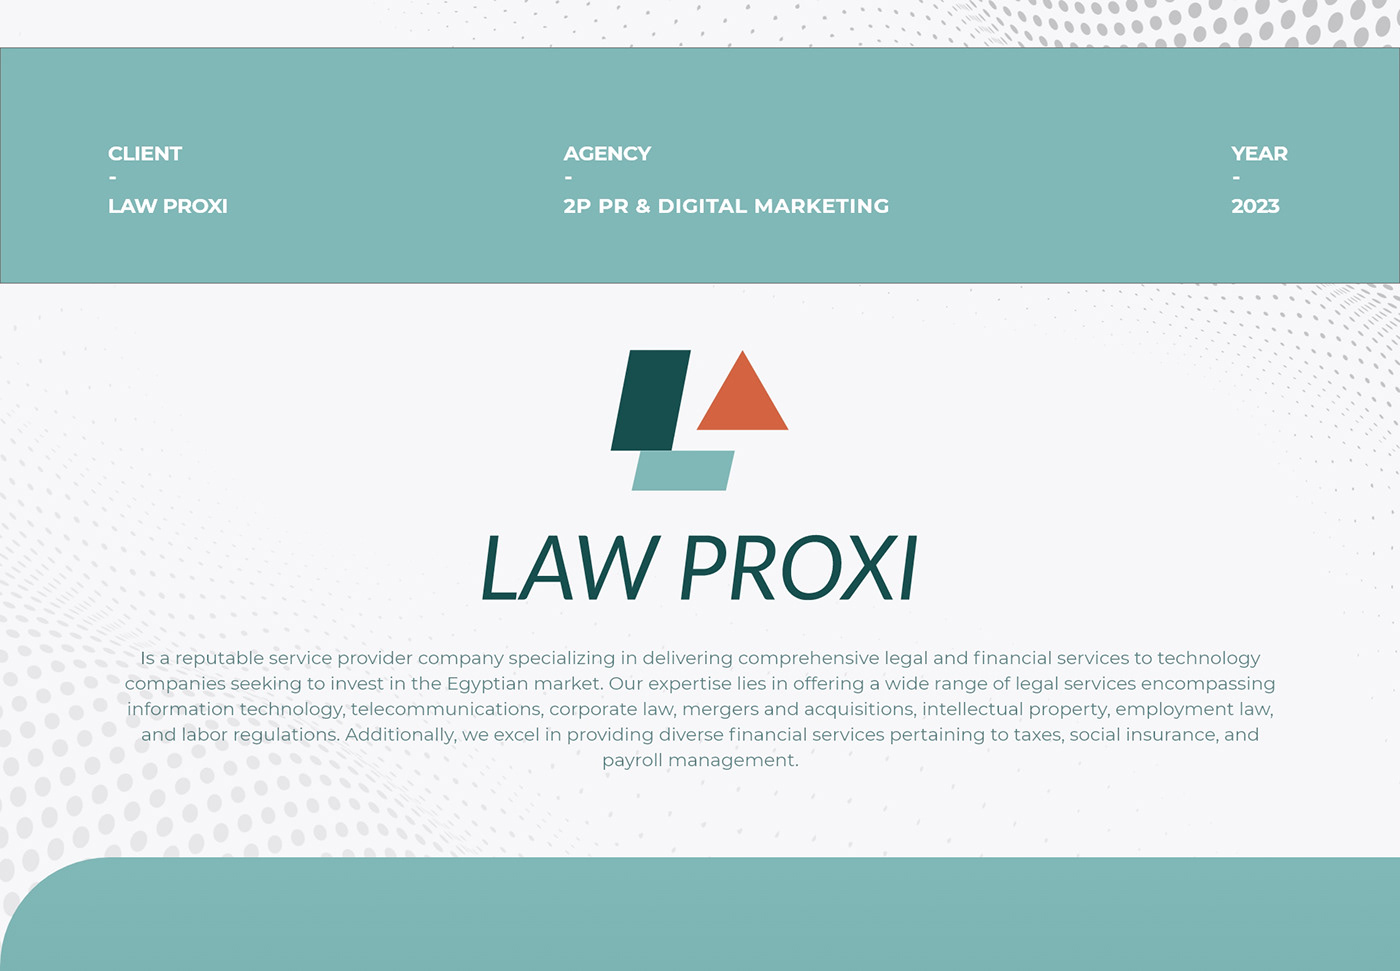 Client: LawProxi
Agency: 2P PR & Digital Marketing
Year: 2023